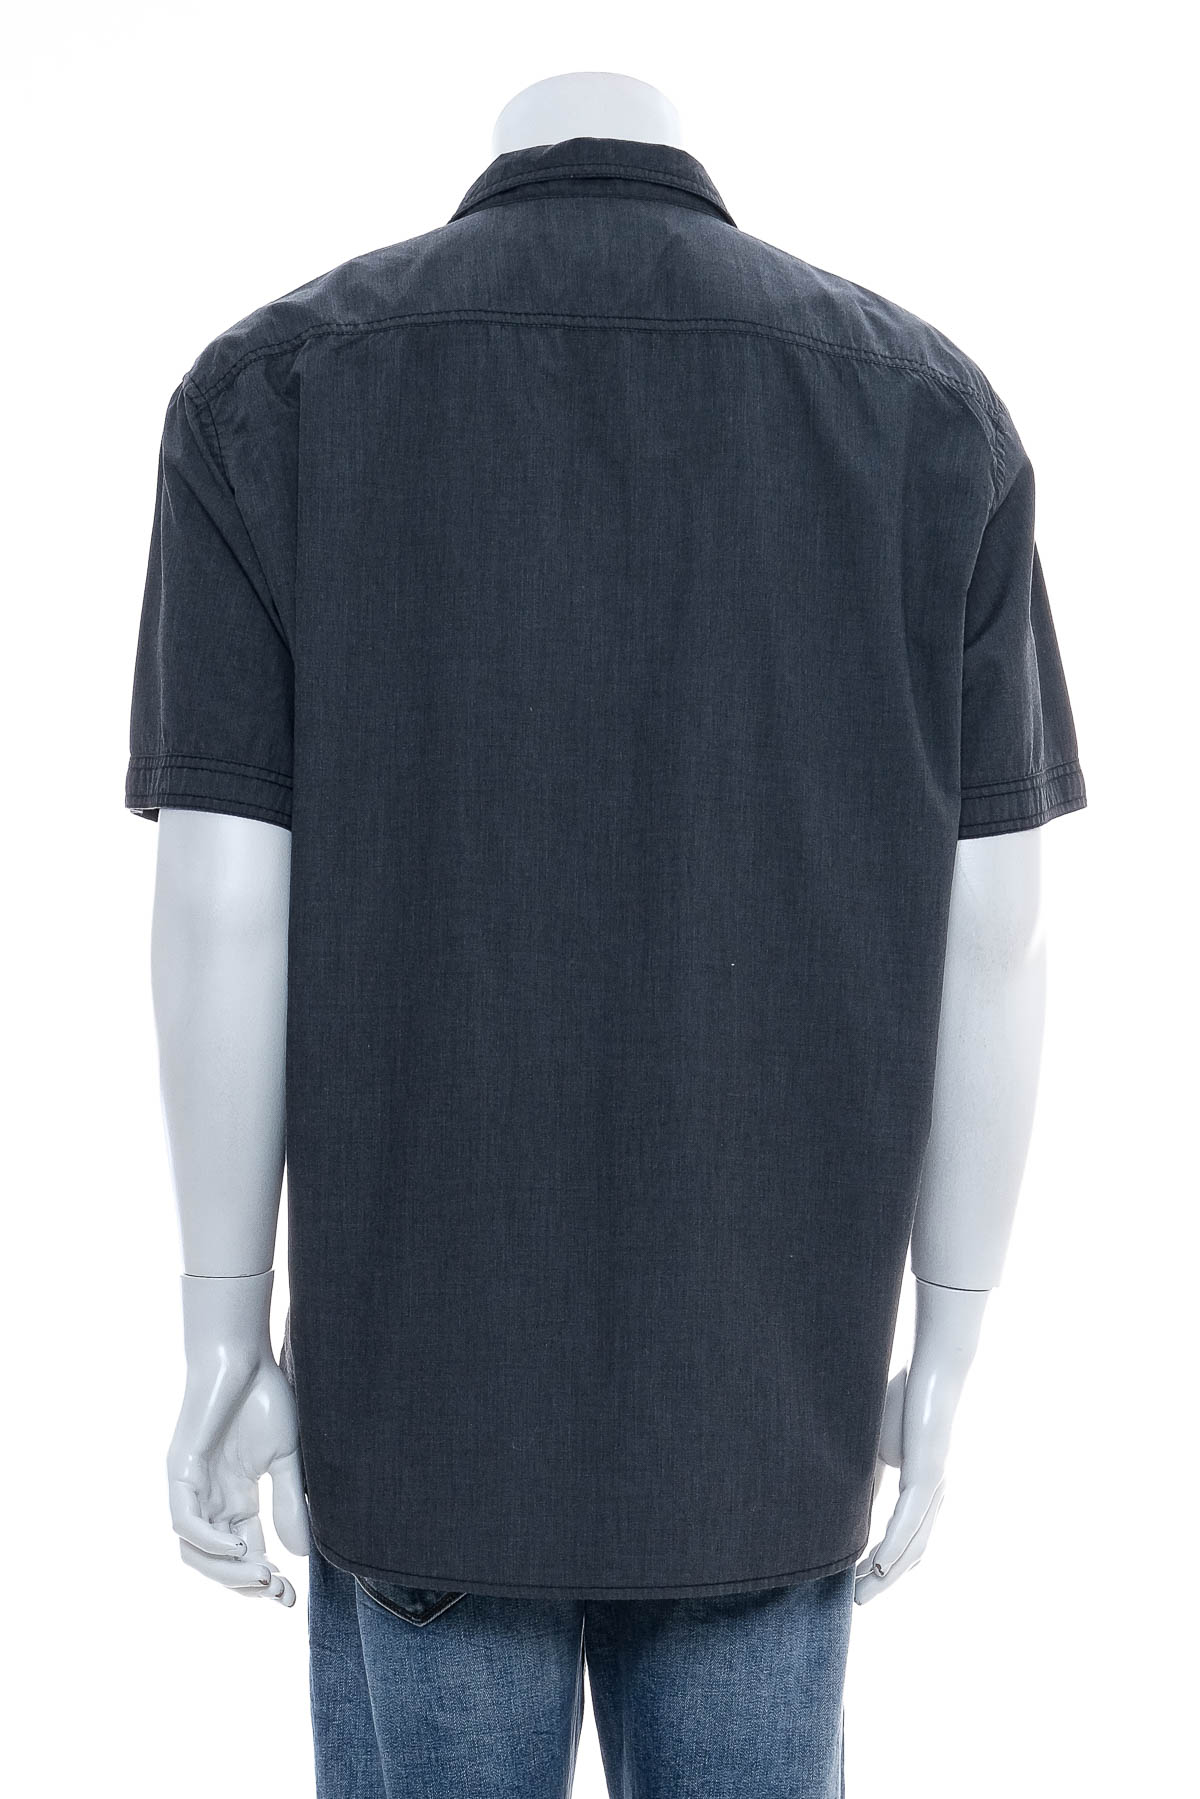 Men's shirt - Angelo Litrico - 1